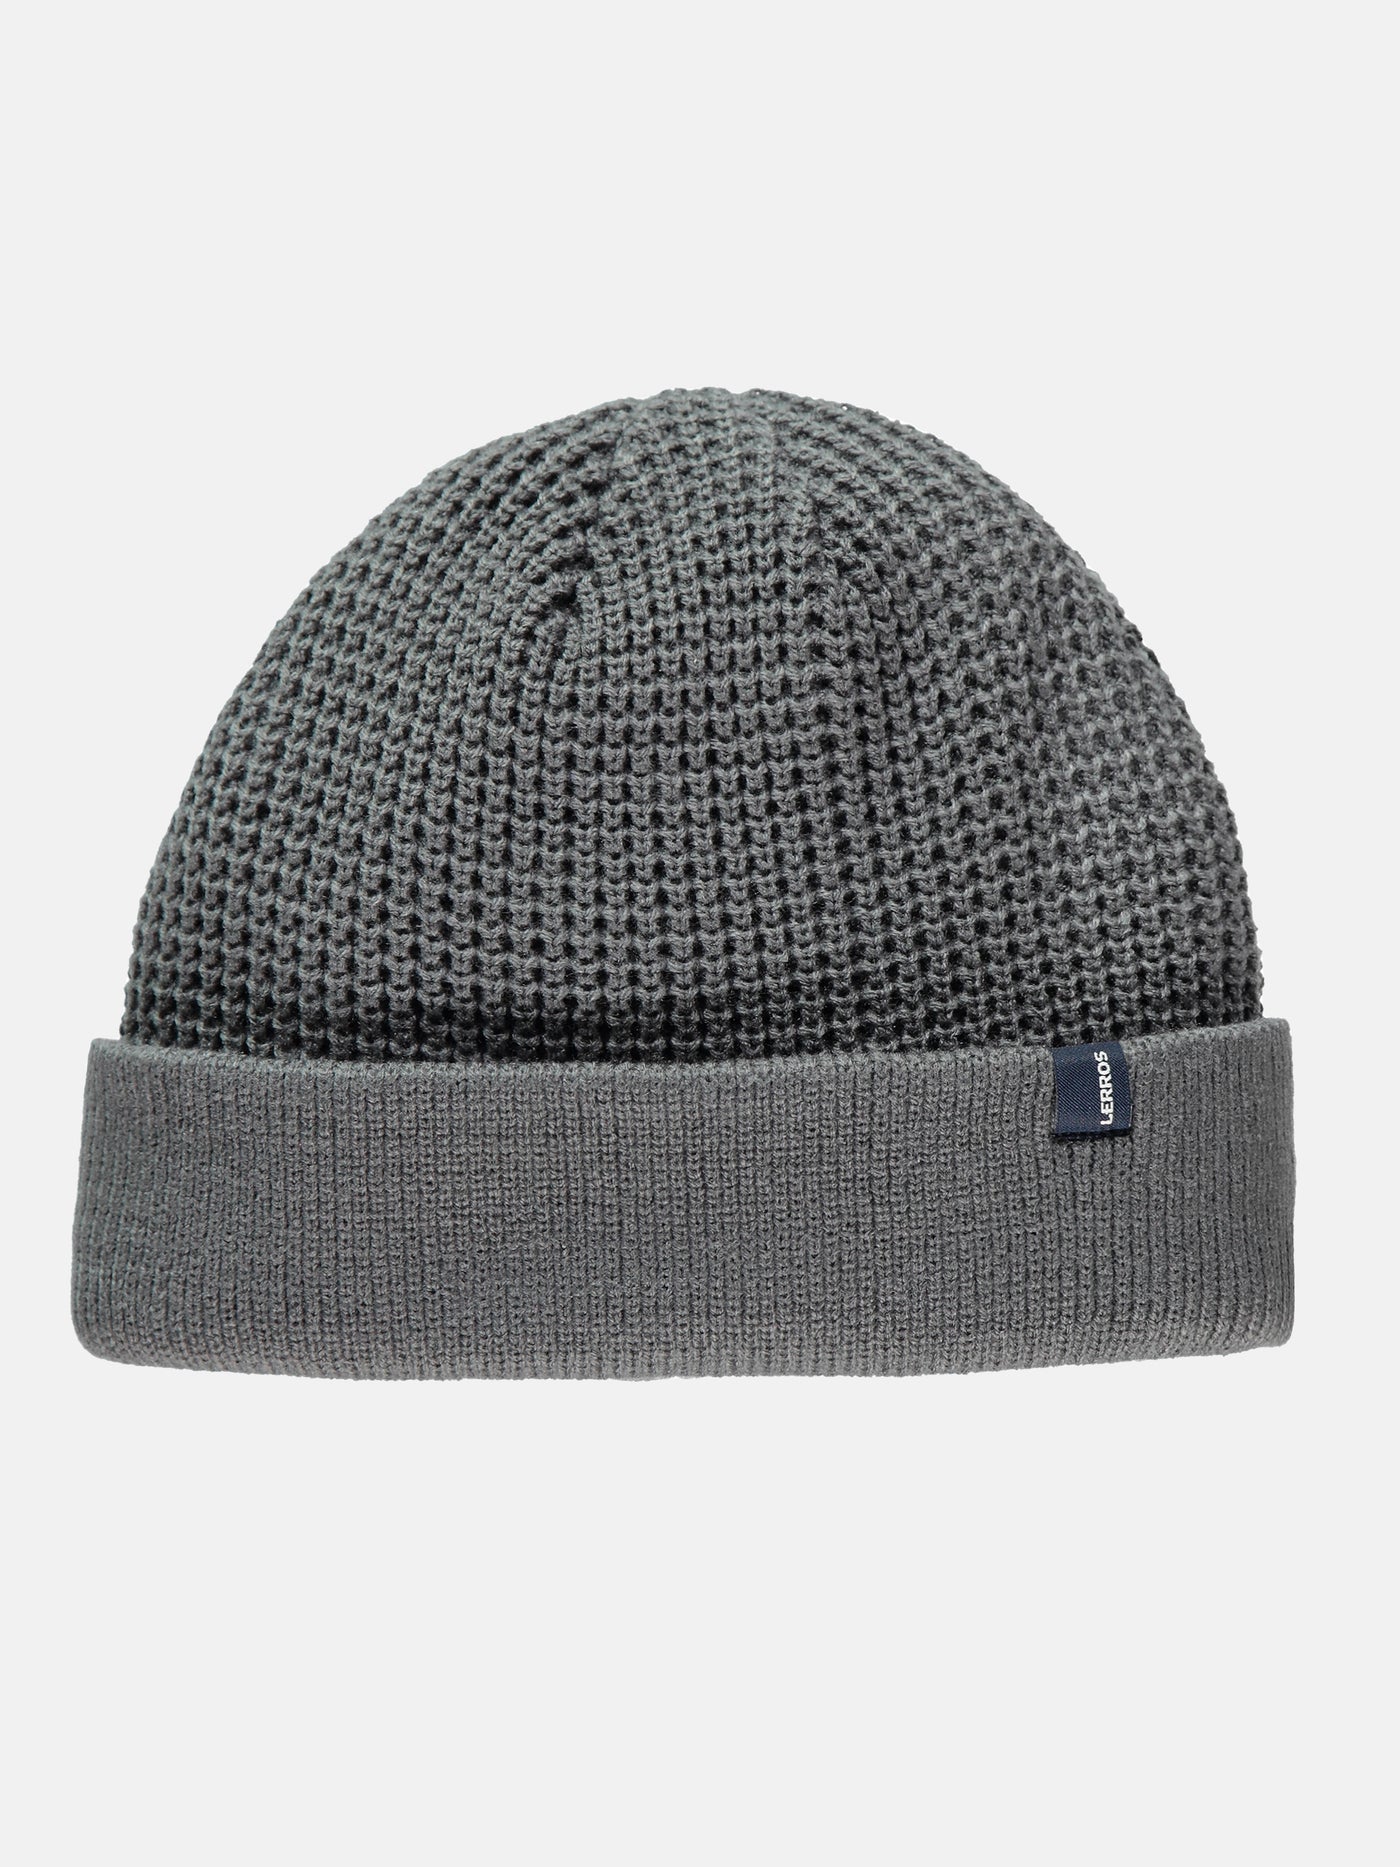 Basic hat, knit mix